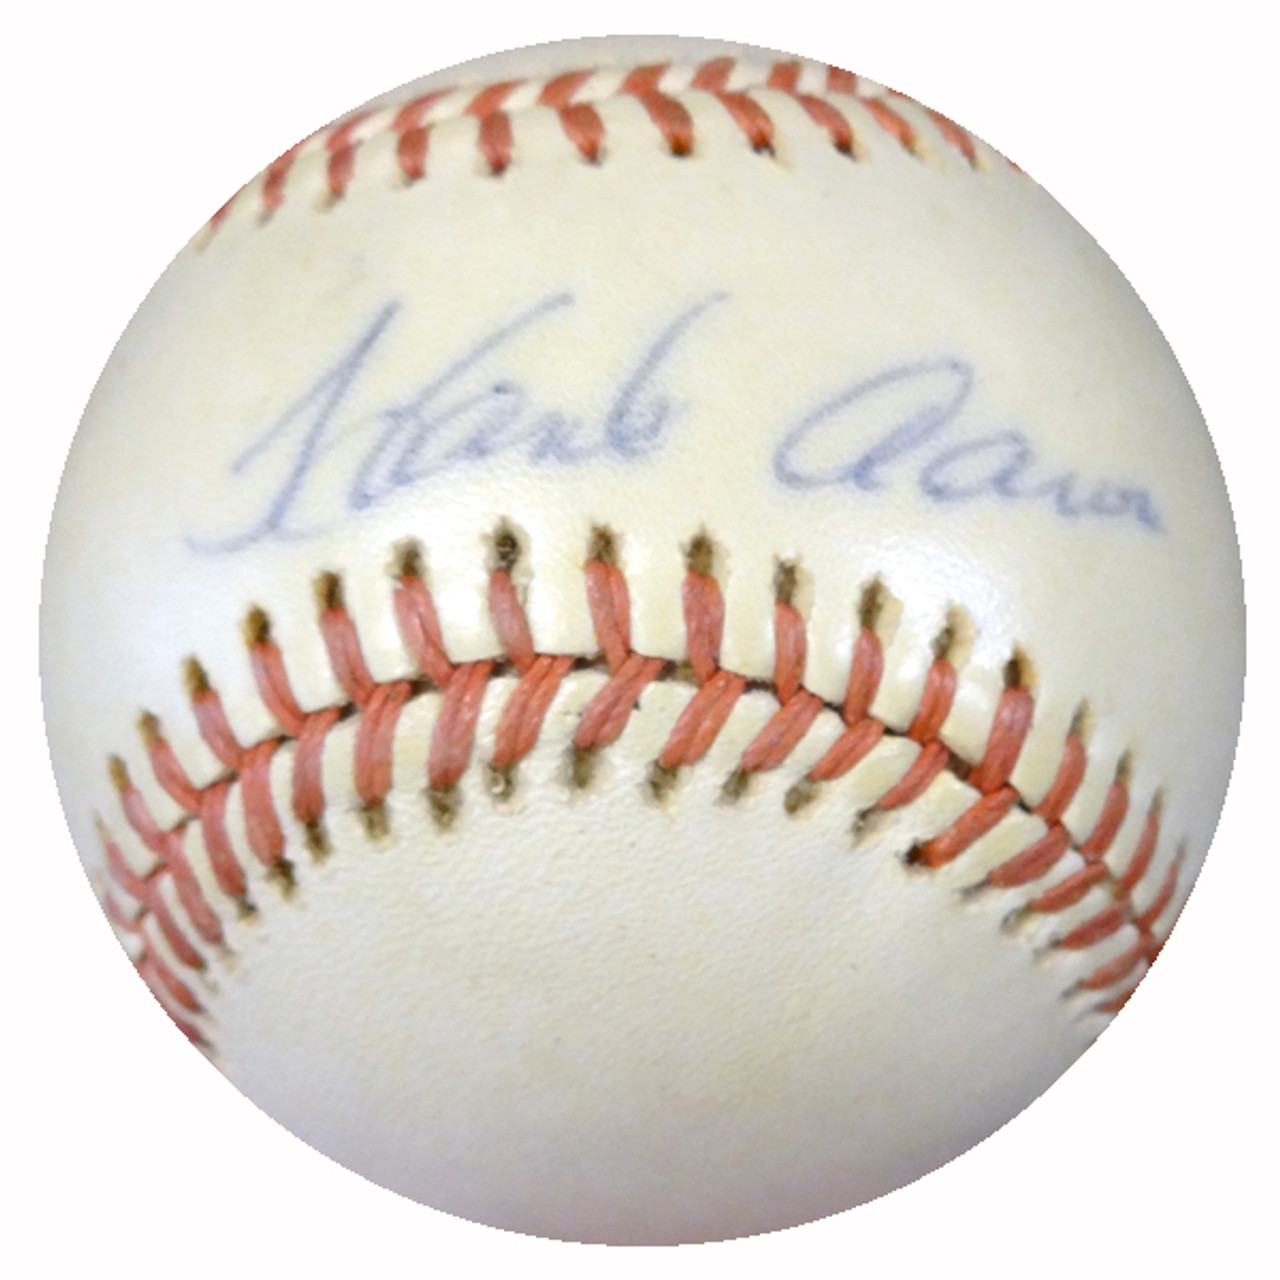 Atlanta Braves - Hank Aaron Signed Baseball - Memorabilia Expert